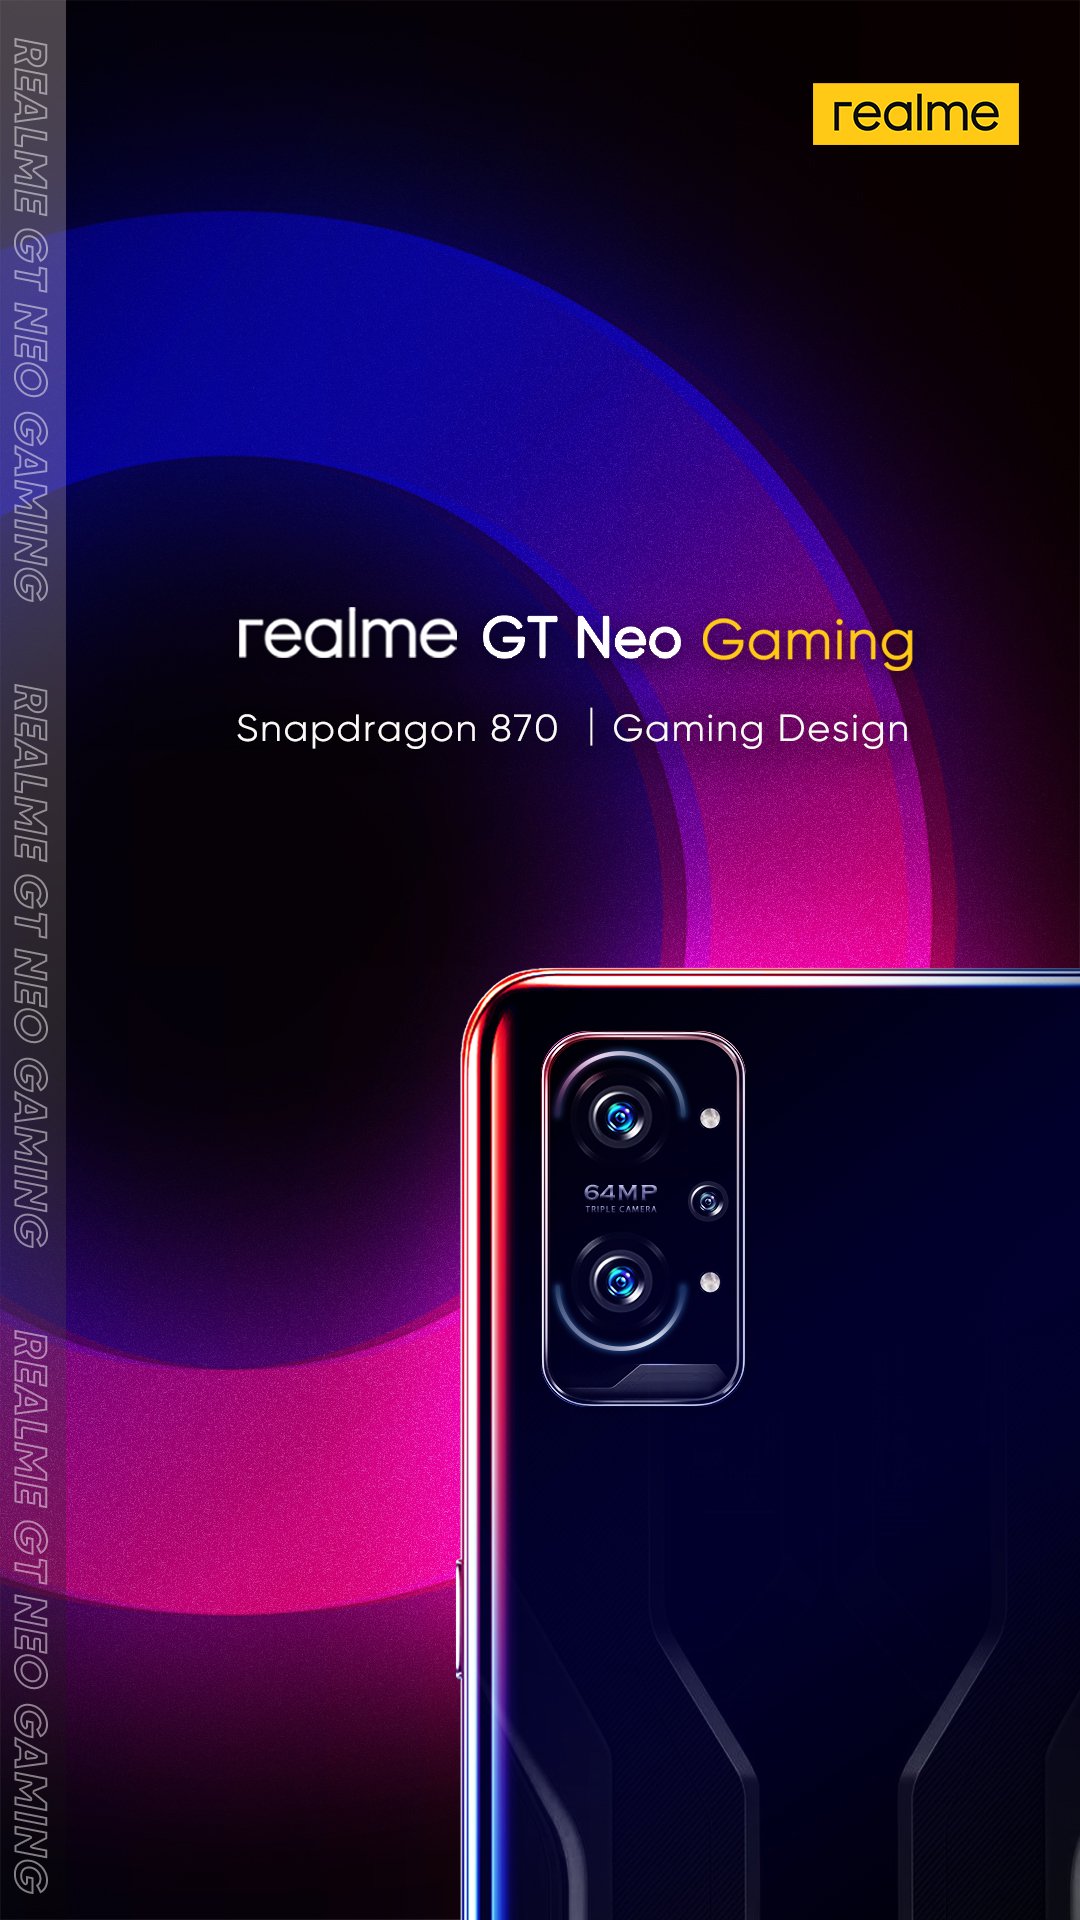 realme-GT-Neo-Gaming.jpg